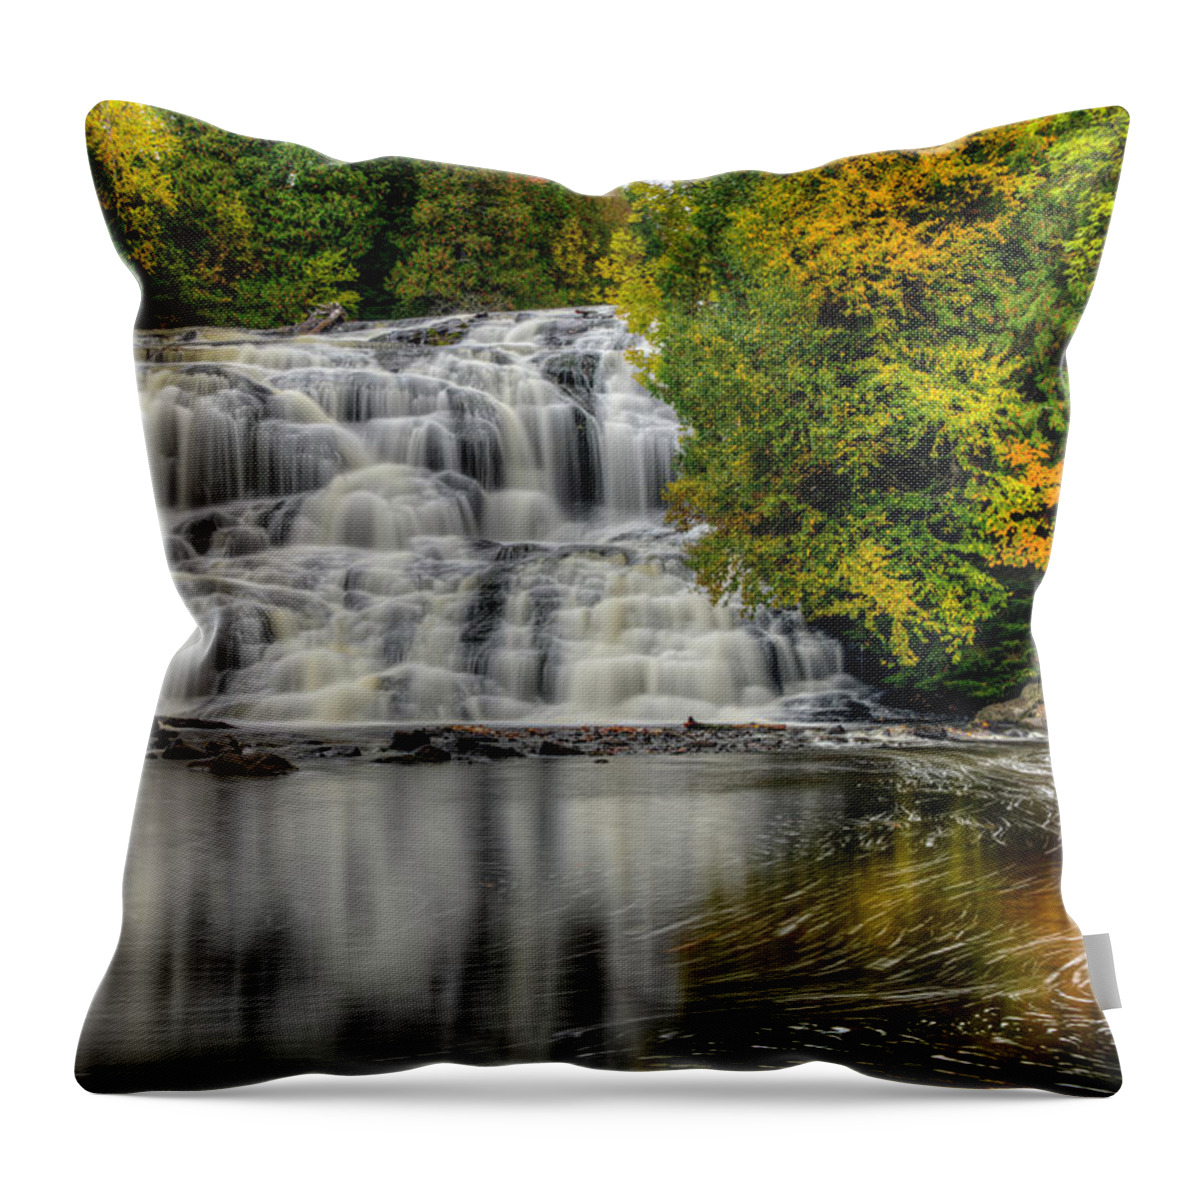 Water Falls Throw Pillow featuring the photograph Lower Bond Falls by John Roach